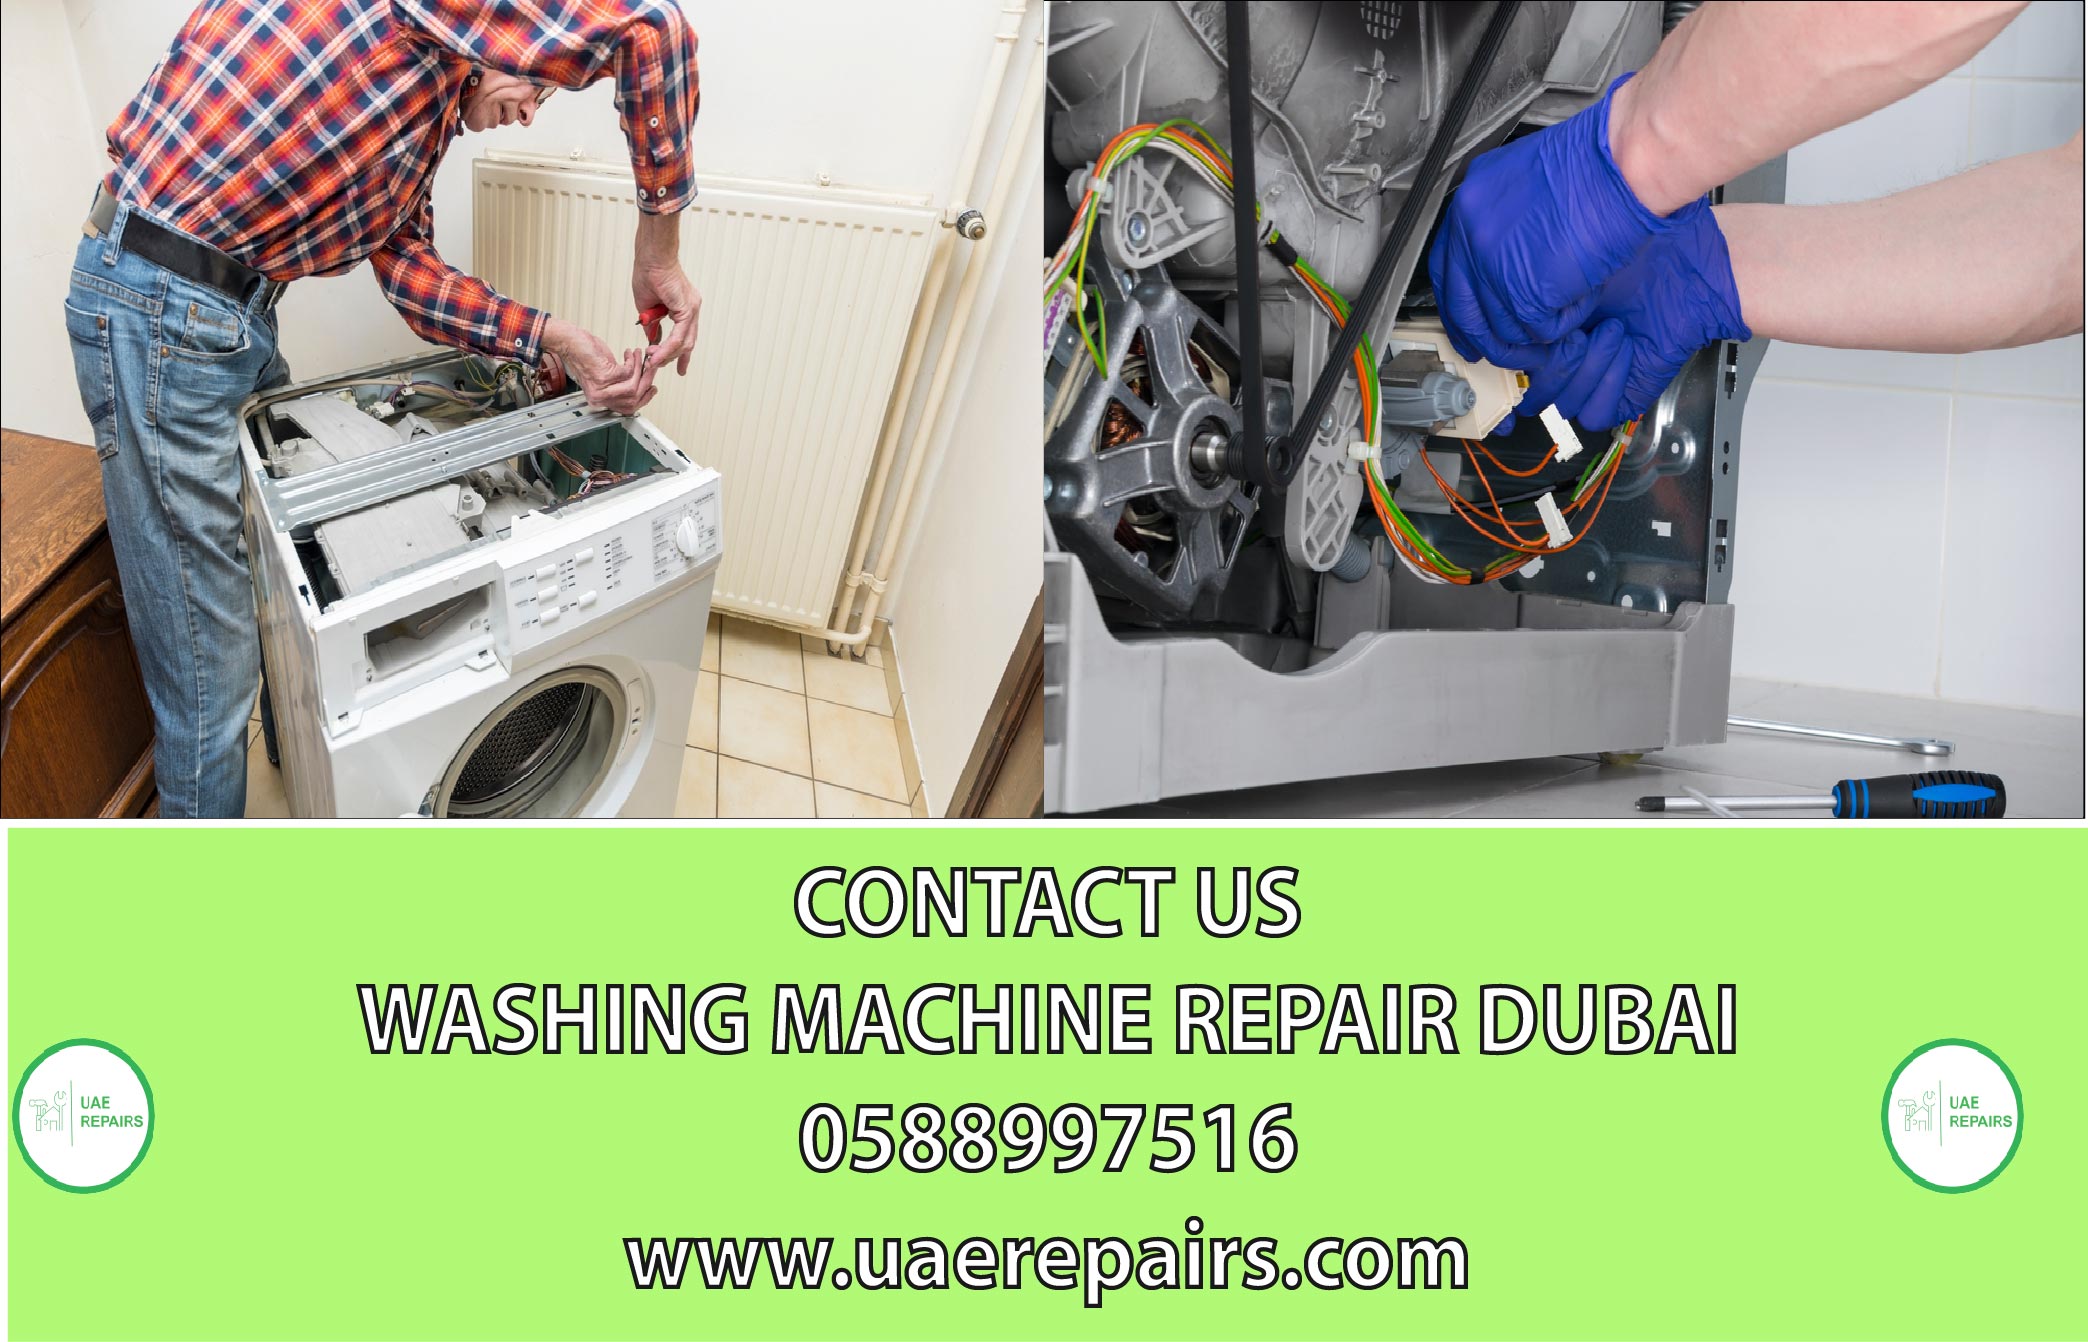 CONTACT UAE REPAIRS FOR WASHING MACHINE REPAIR DUBAI 0588997516